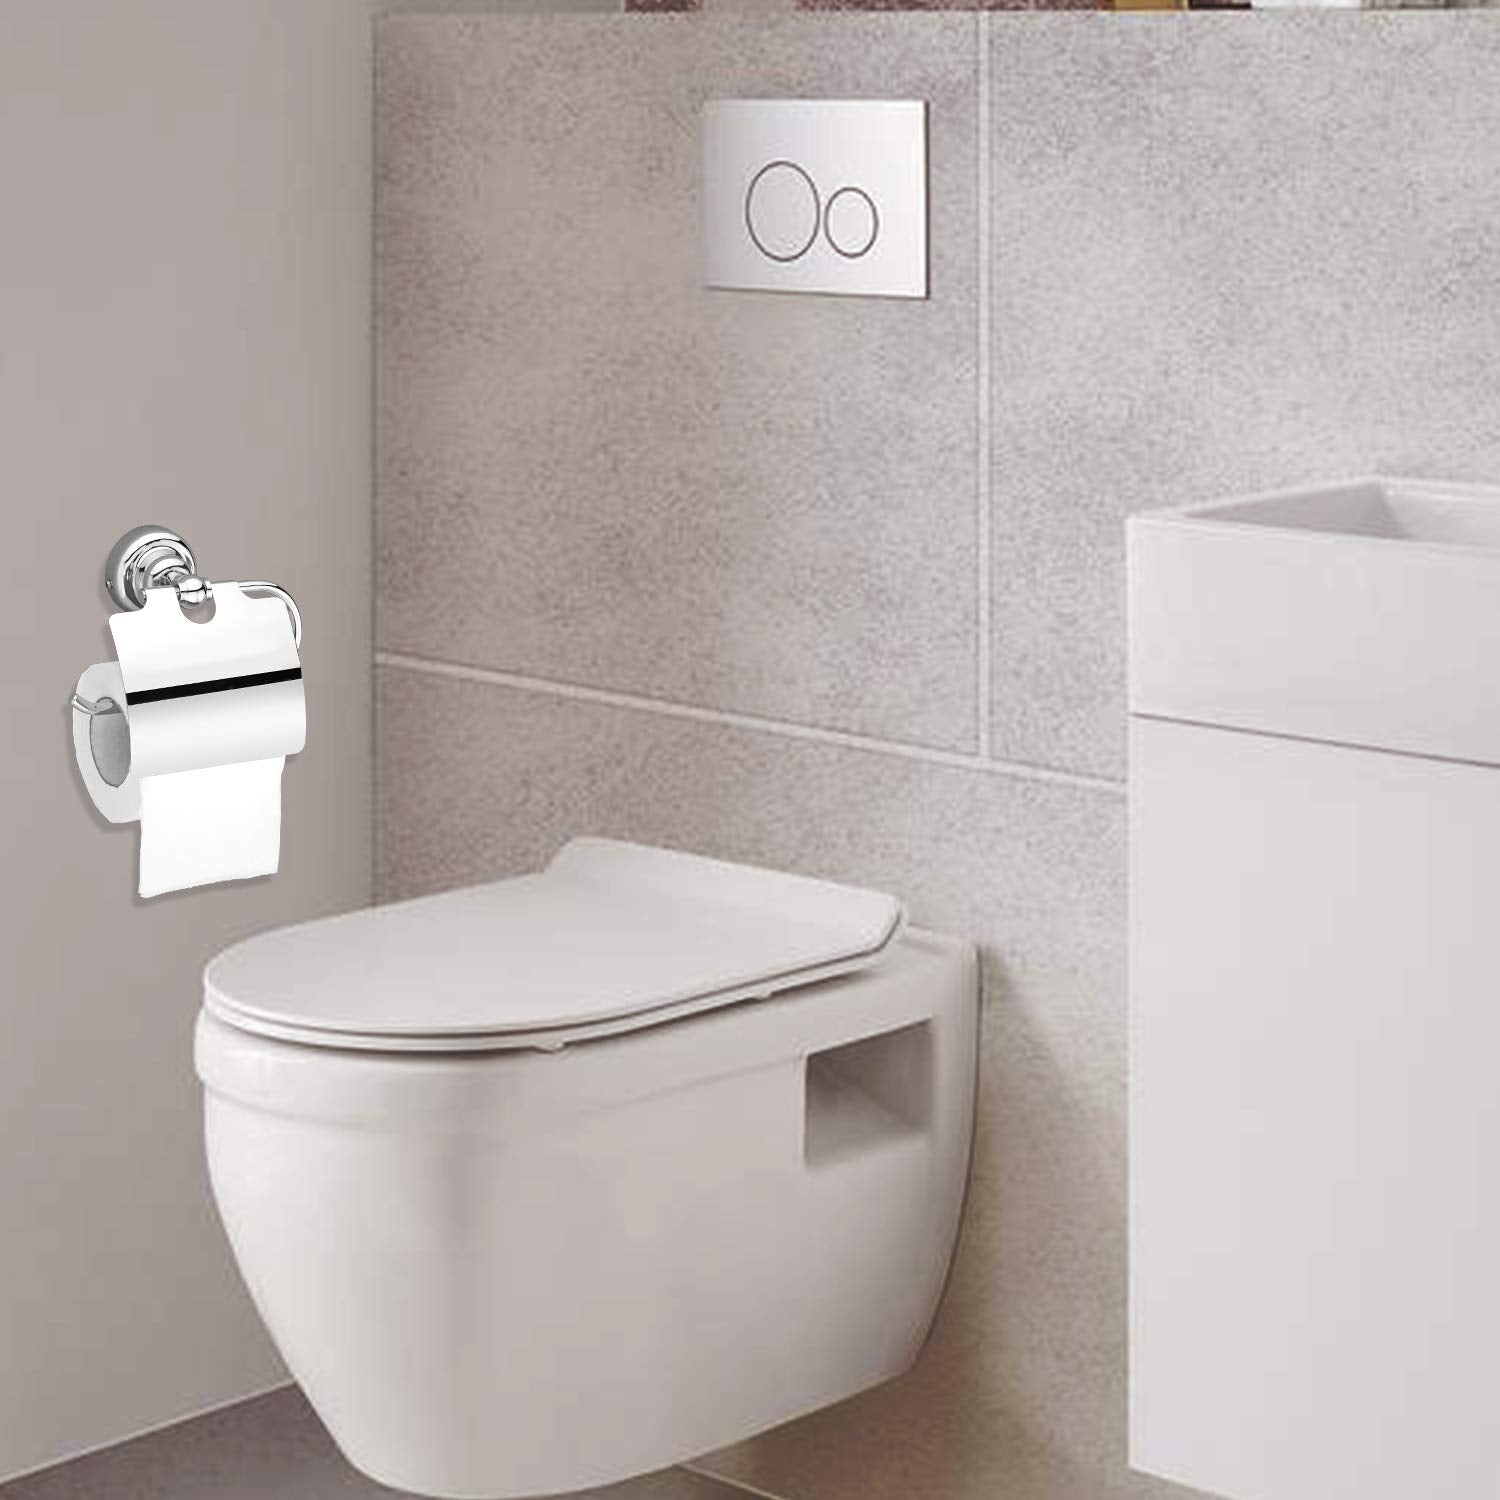 Plantex Platinum Stainless Steel 304 Grade Skyllo Toilet Paper Roll Holder/Toilet Paper Holder in Bathroom/Kitchen/Bathroom Accessories(Chrome) - Pack of 3